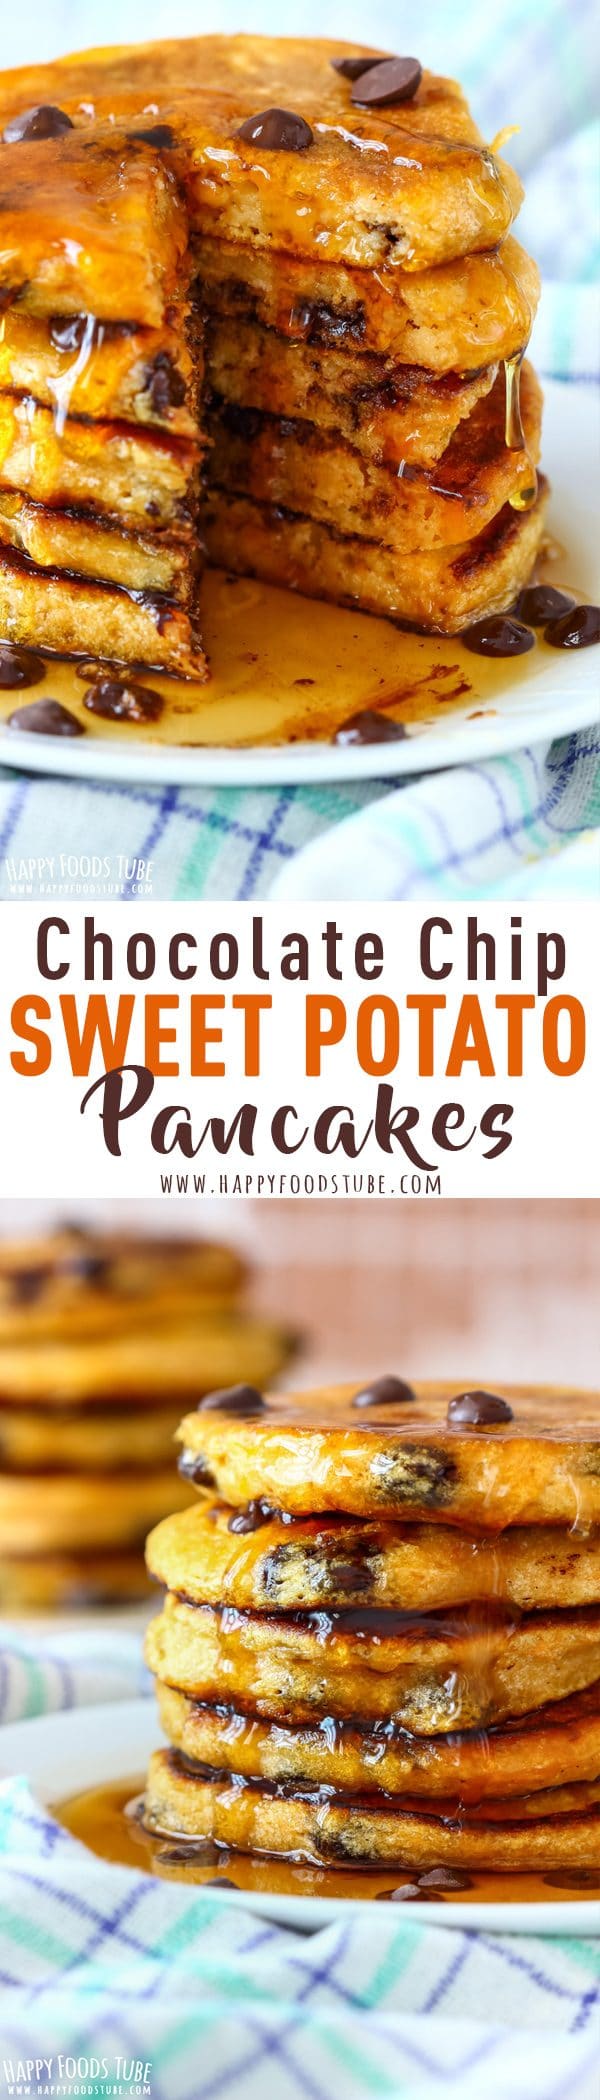 Chocolate Chip Sweet Potato Pancakes Recipe Picture